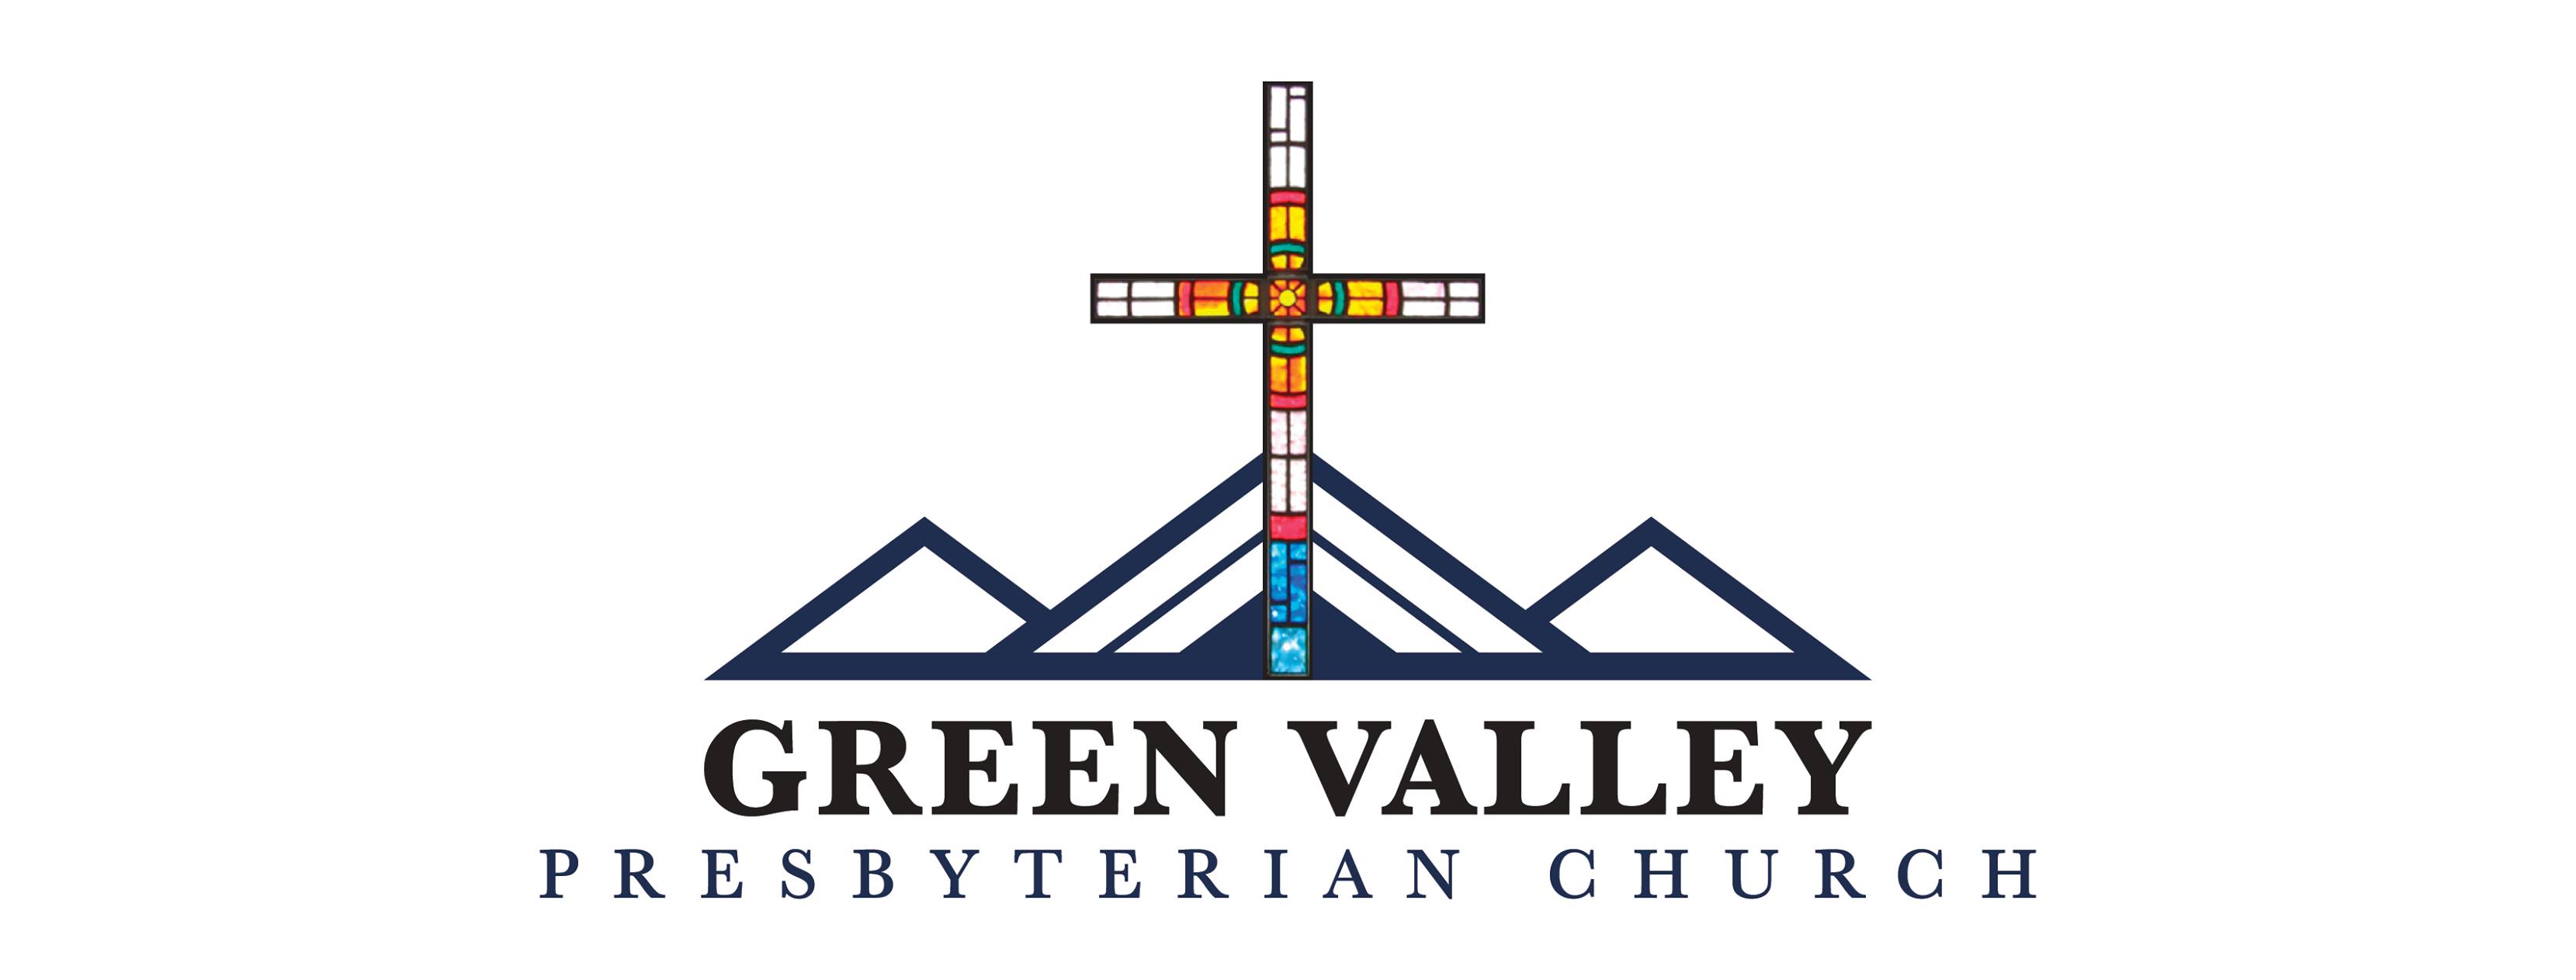 Green Valley Presbyterian Church